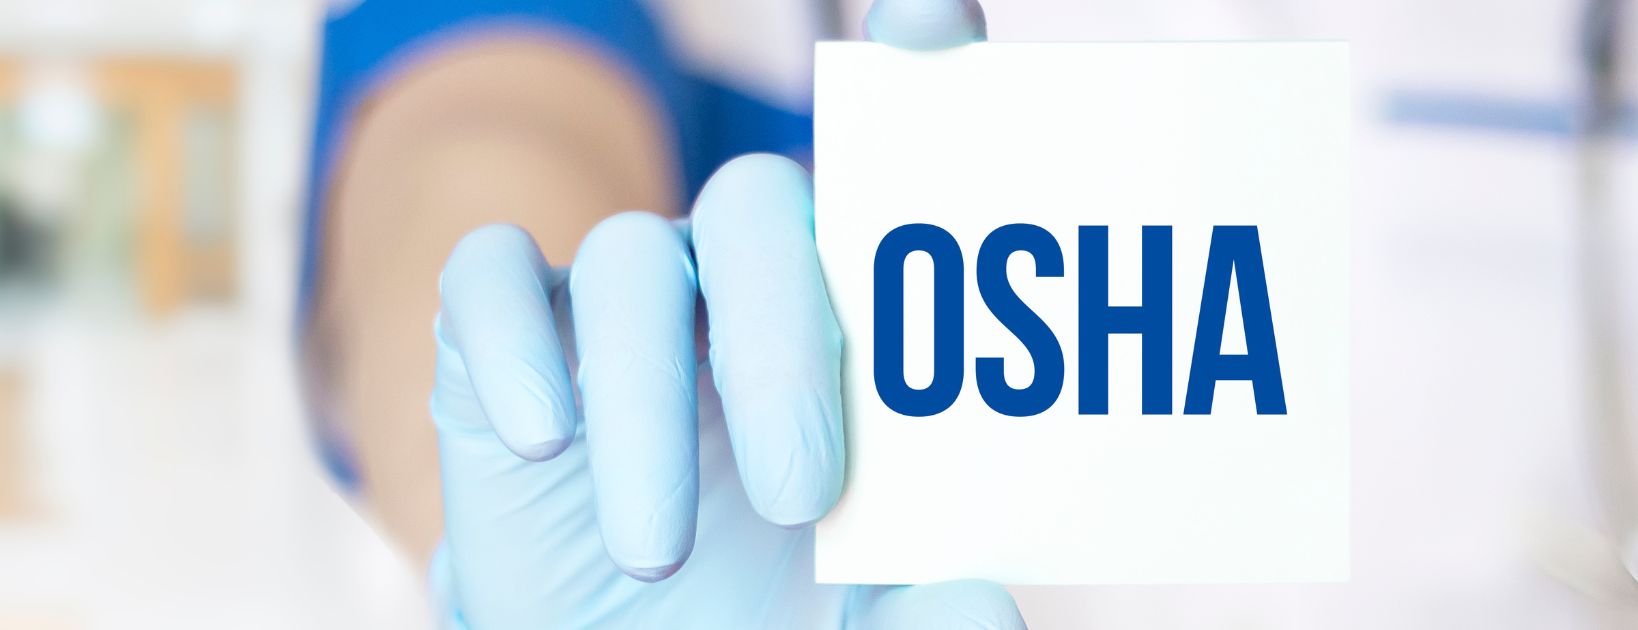 8 Tips When Preparing for an OSHA Inspection